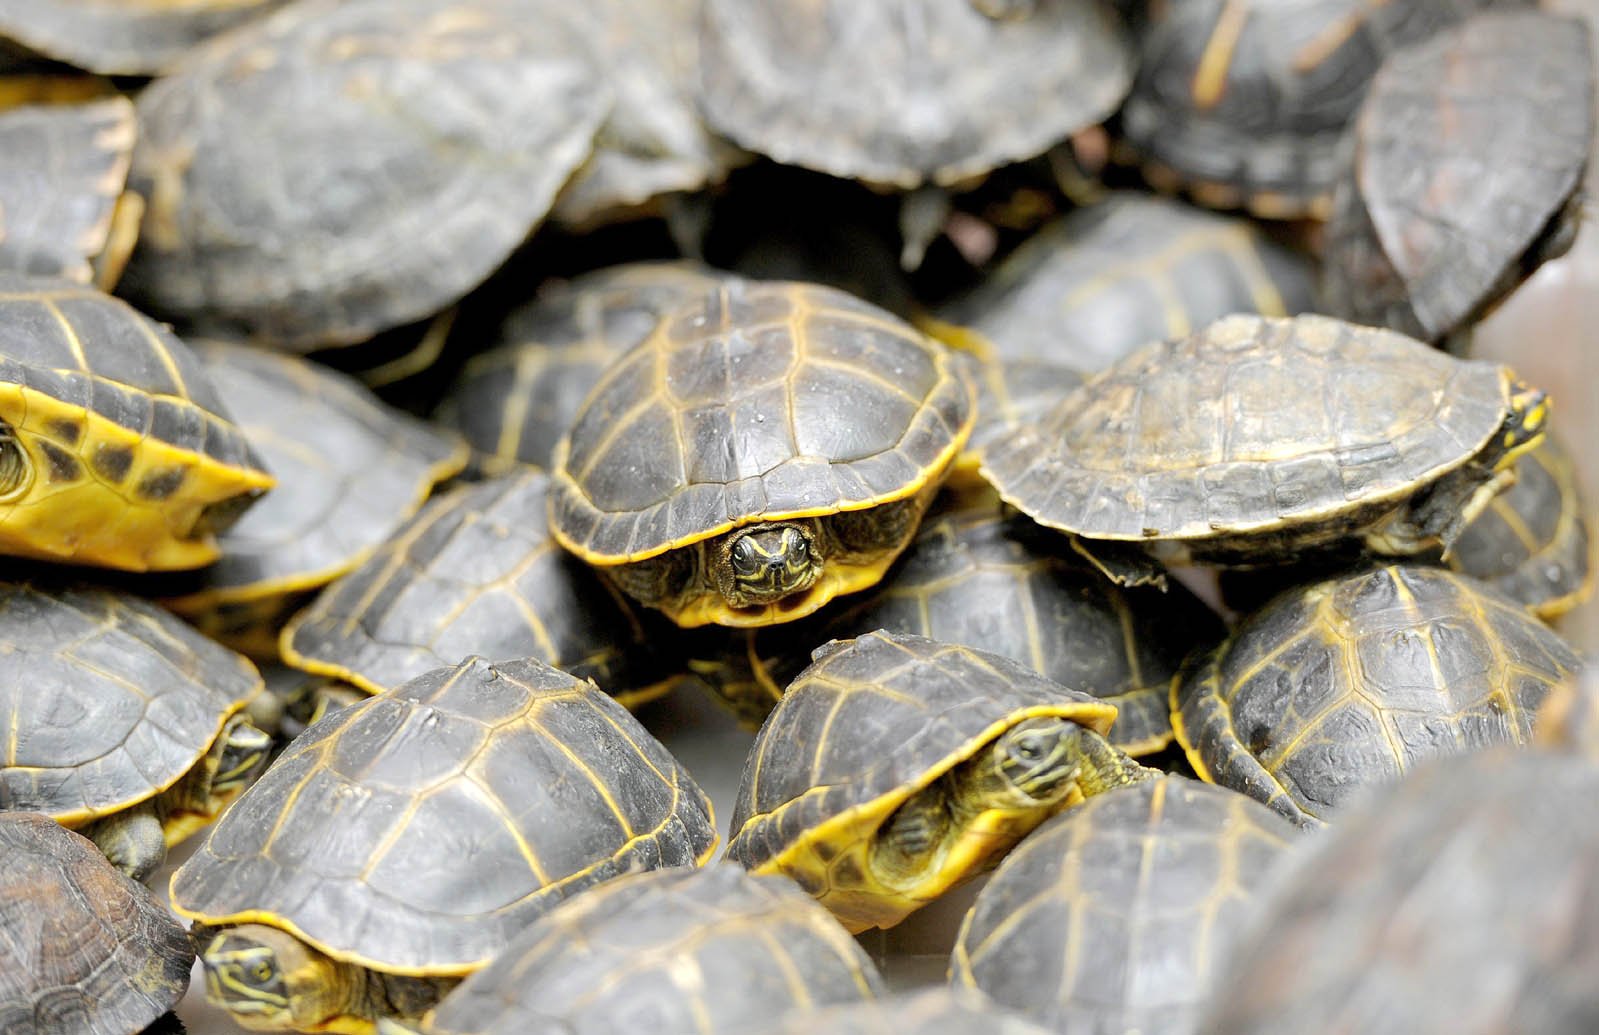 wwf pakistan stresses need to save sea turtles